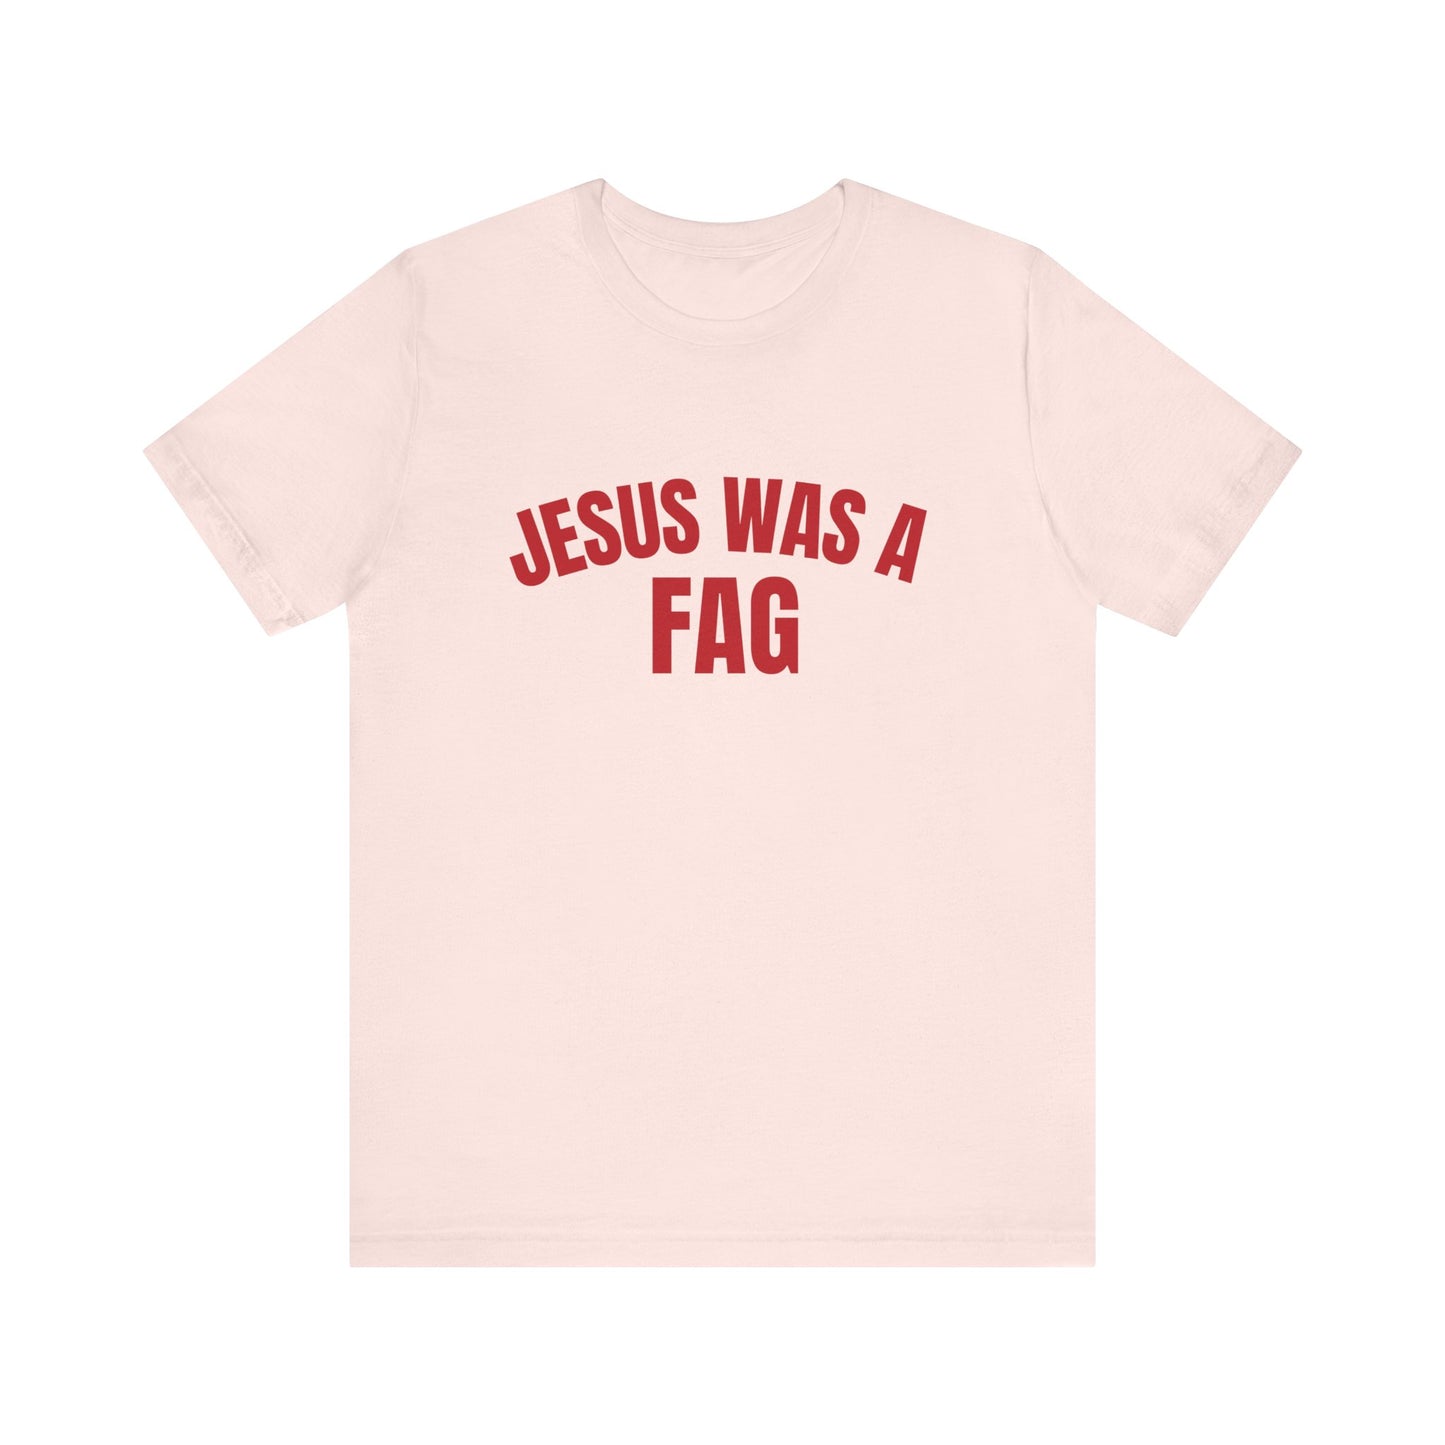 Jesus Was A Fag - Funny Unisex T-Shirt, Funny LGBTQ Pride Tee